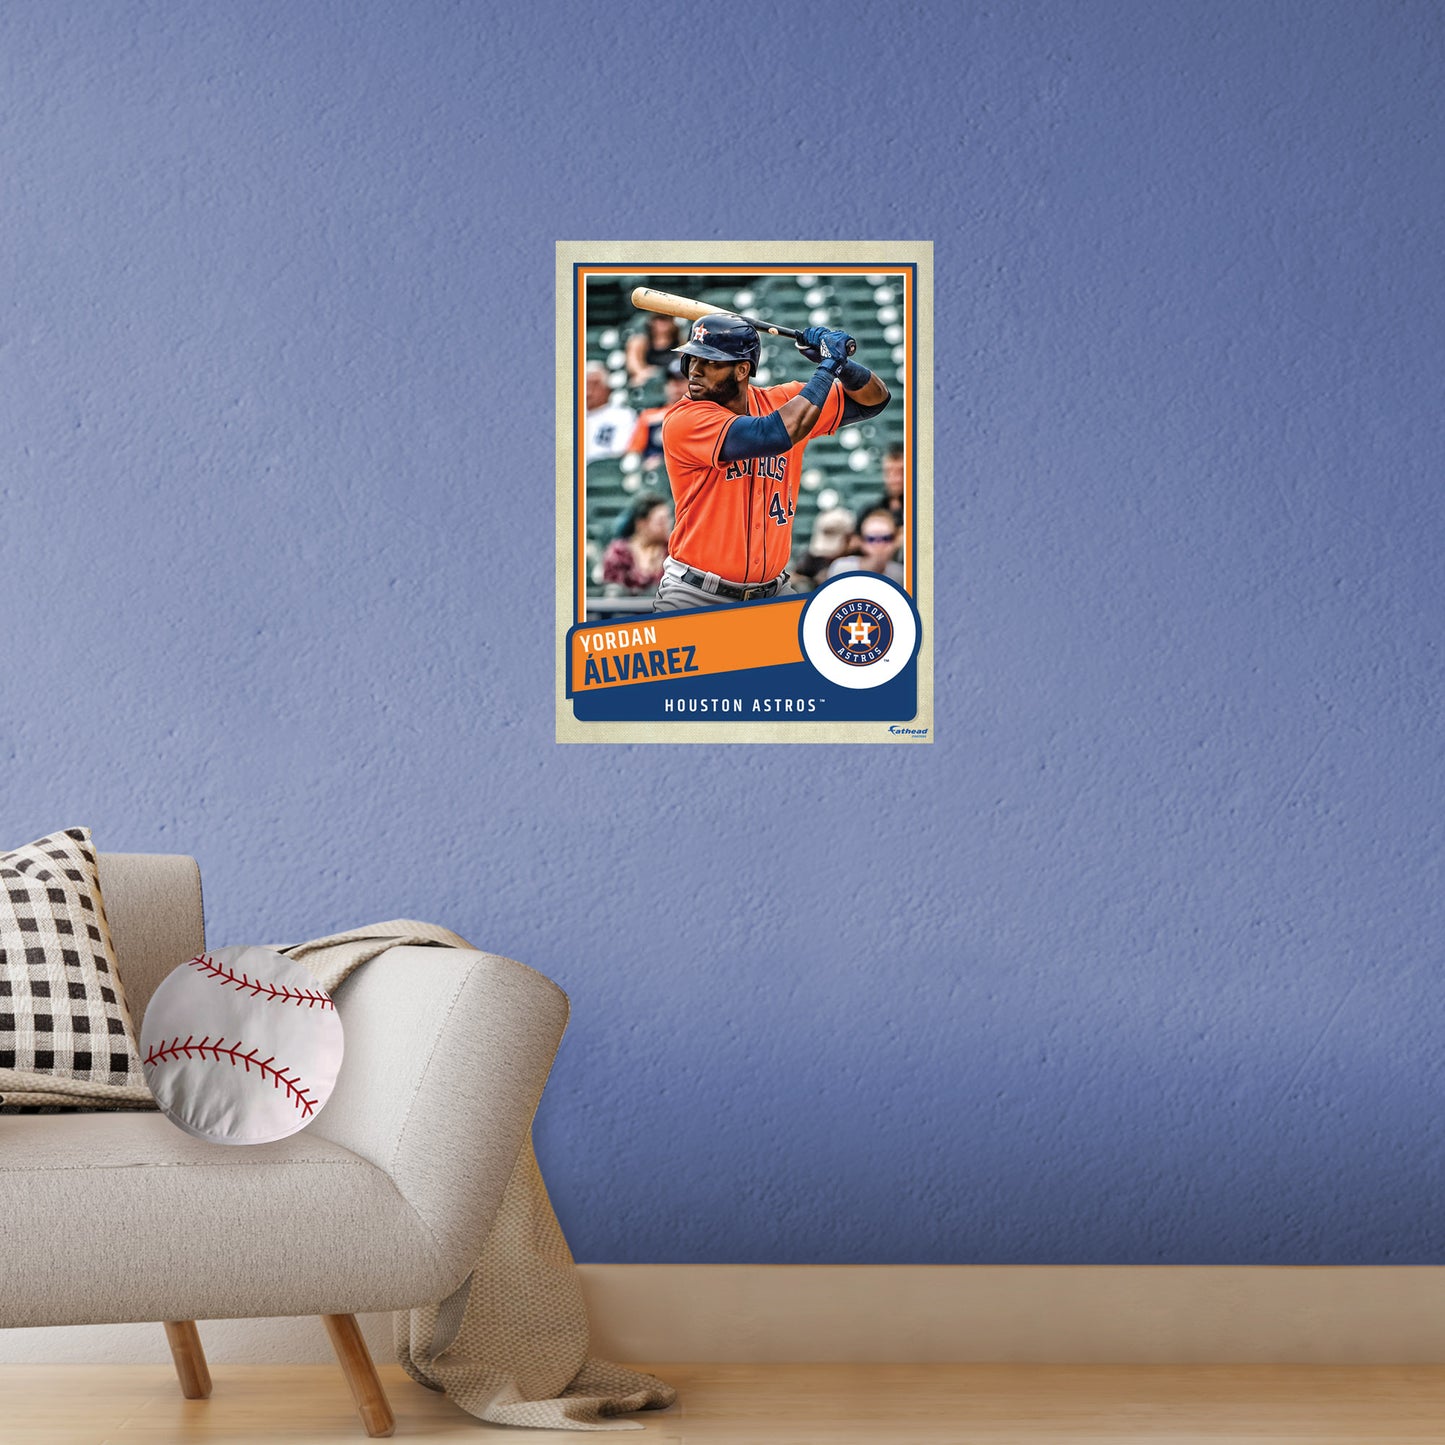 Houston Astros: Yordan Álvarez  Poster        - Officially Licensed MLB Removable     Adhesive Decal